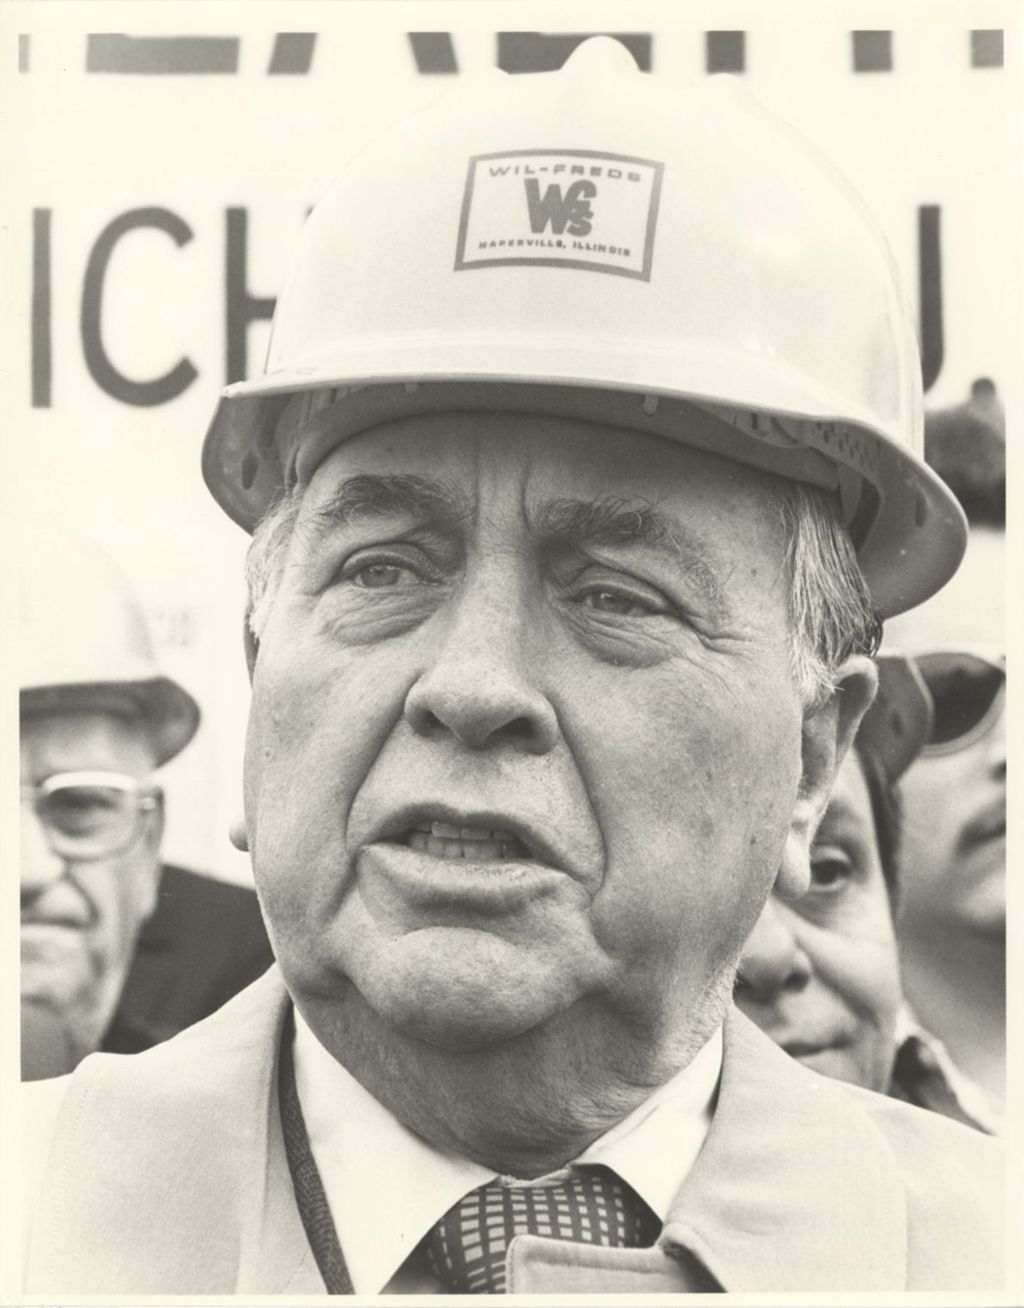 Miniature of Richard J. Daley wearing a hard hat